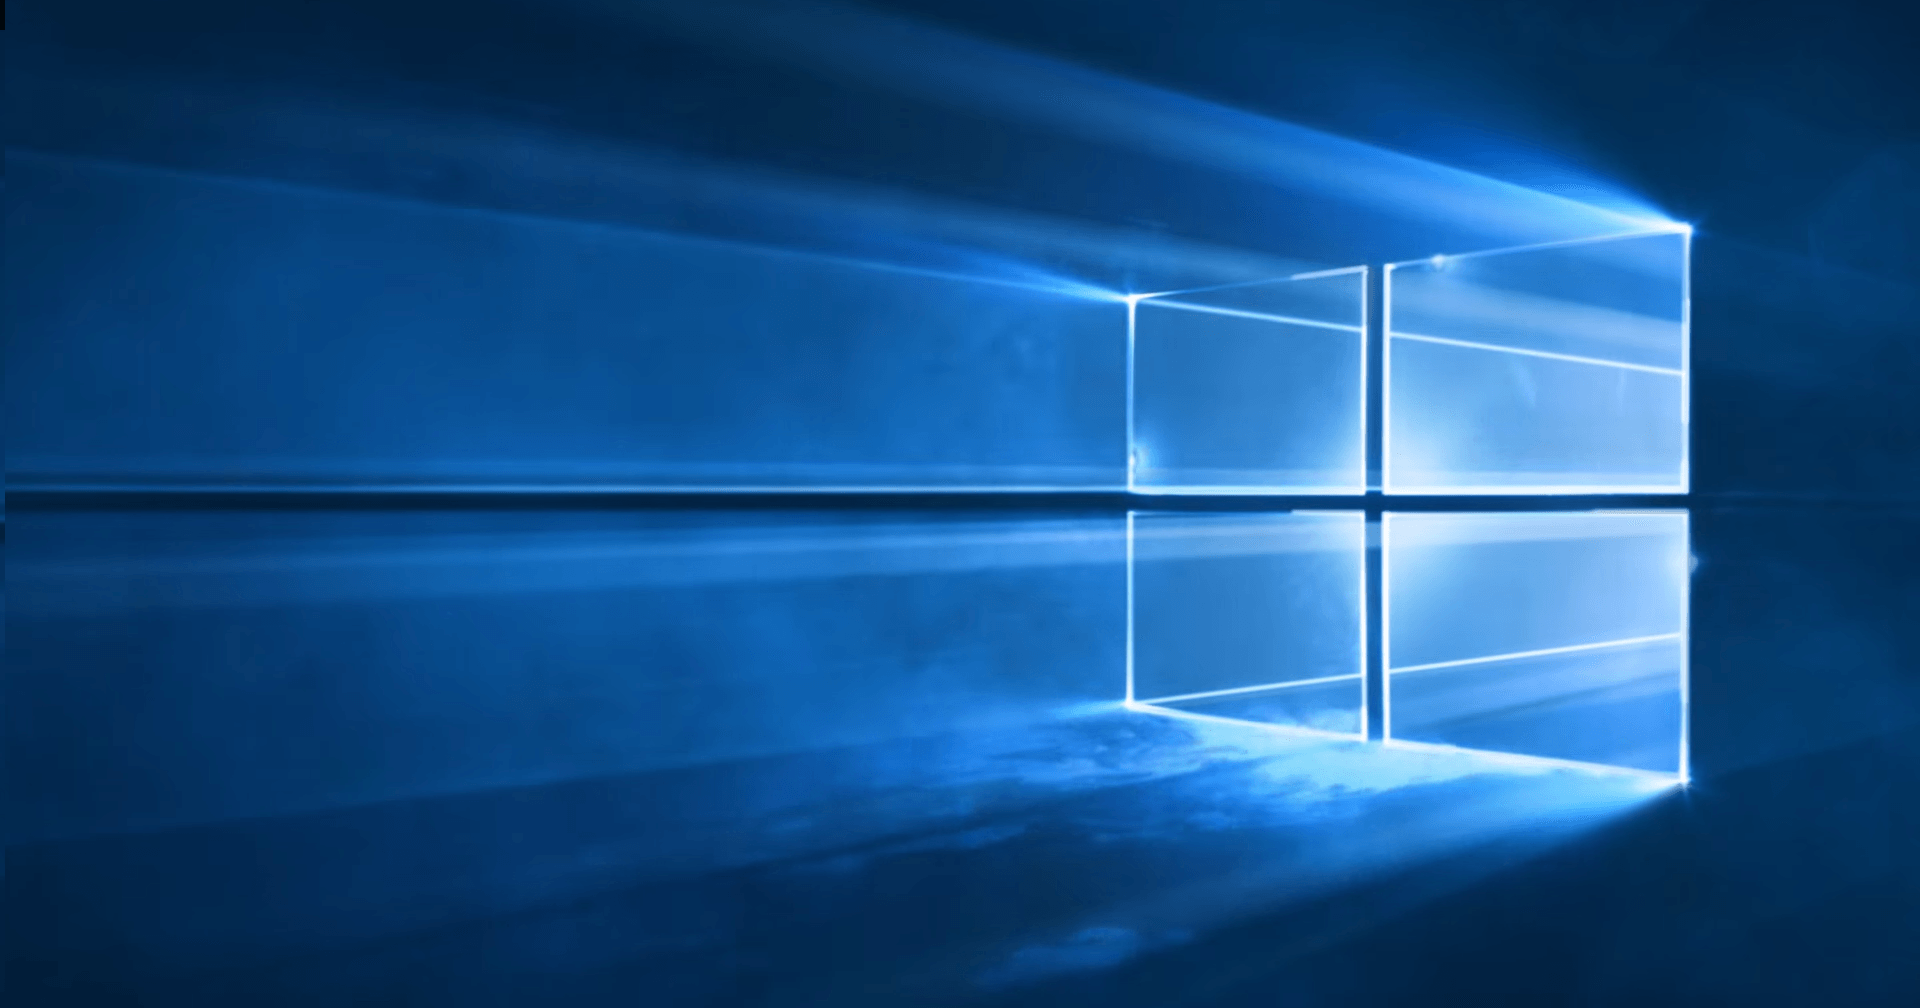 Windows 10 Insider Wallpapers - WallpaperSafari